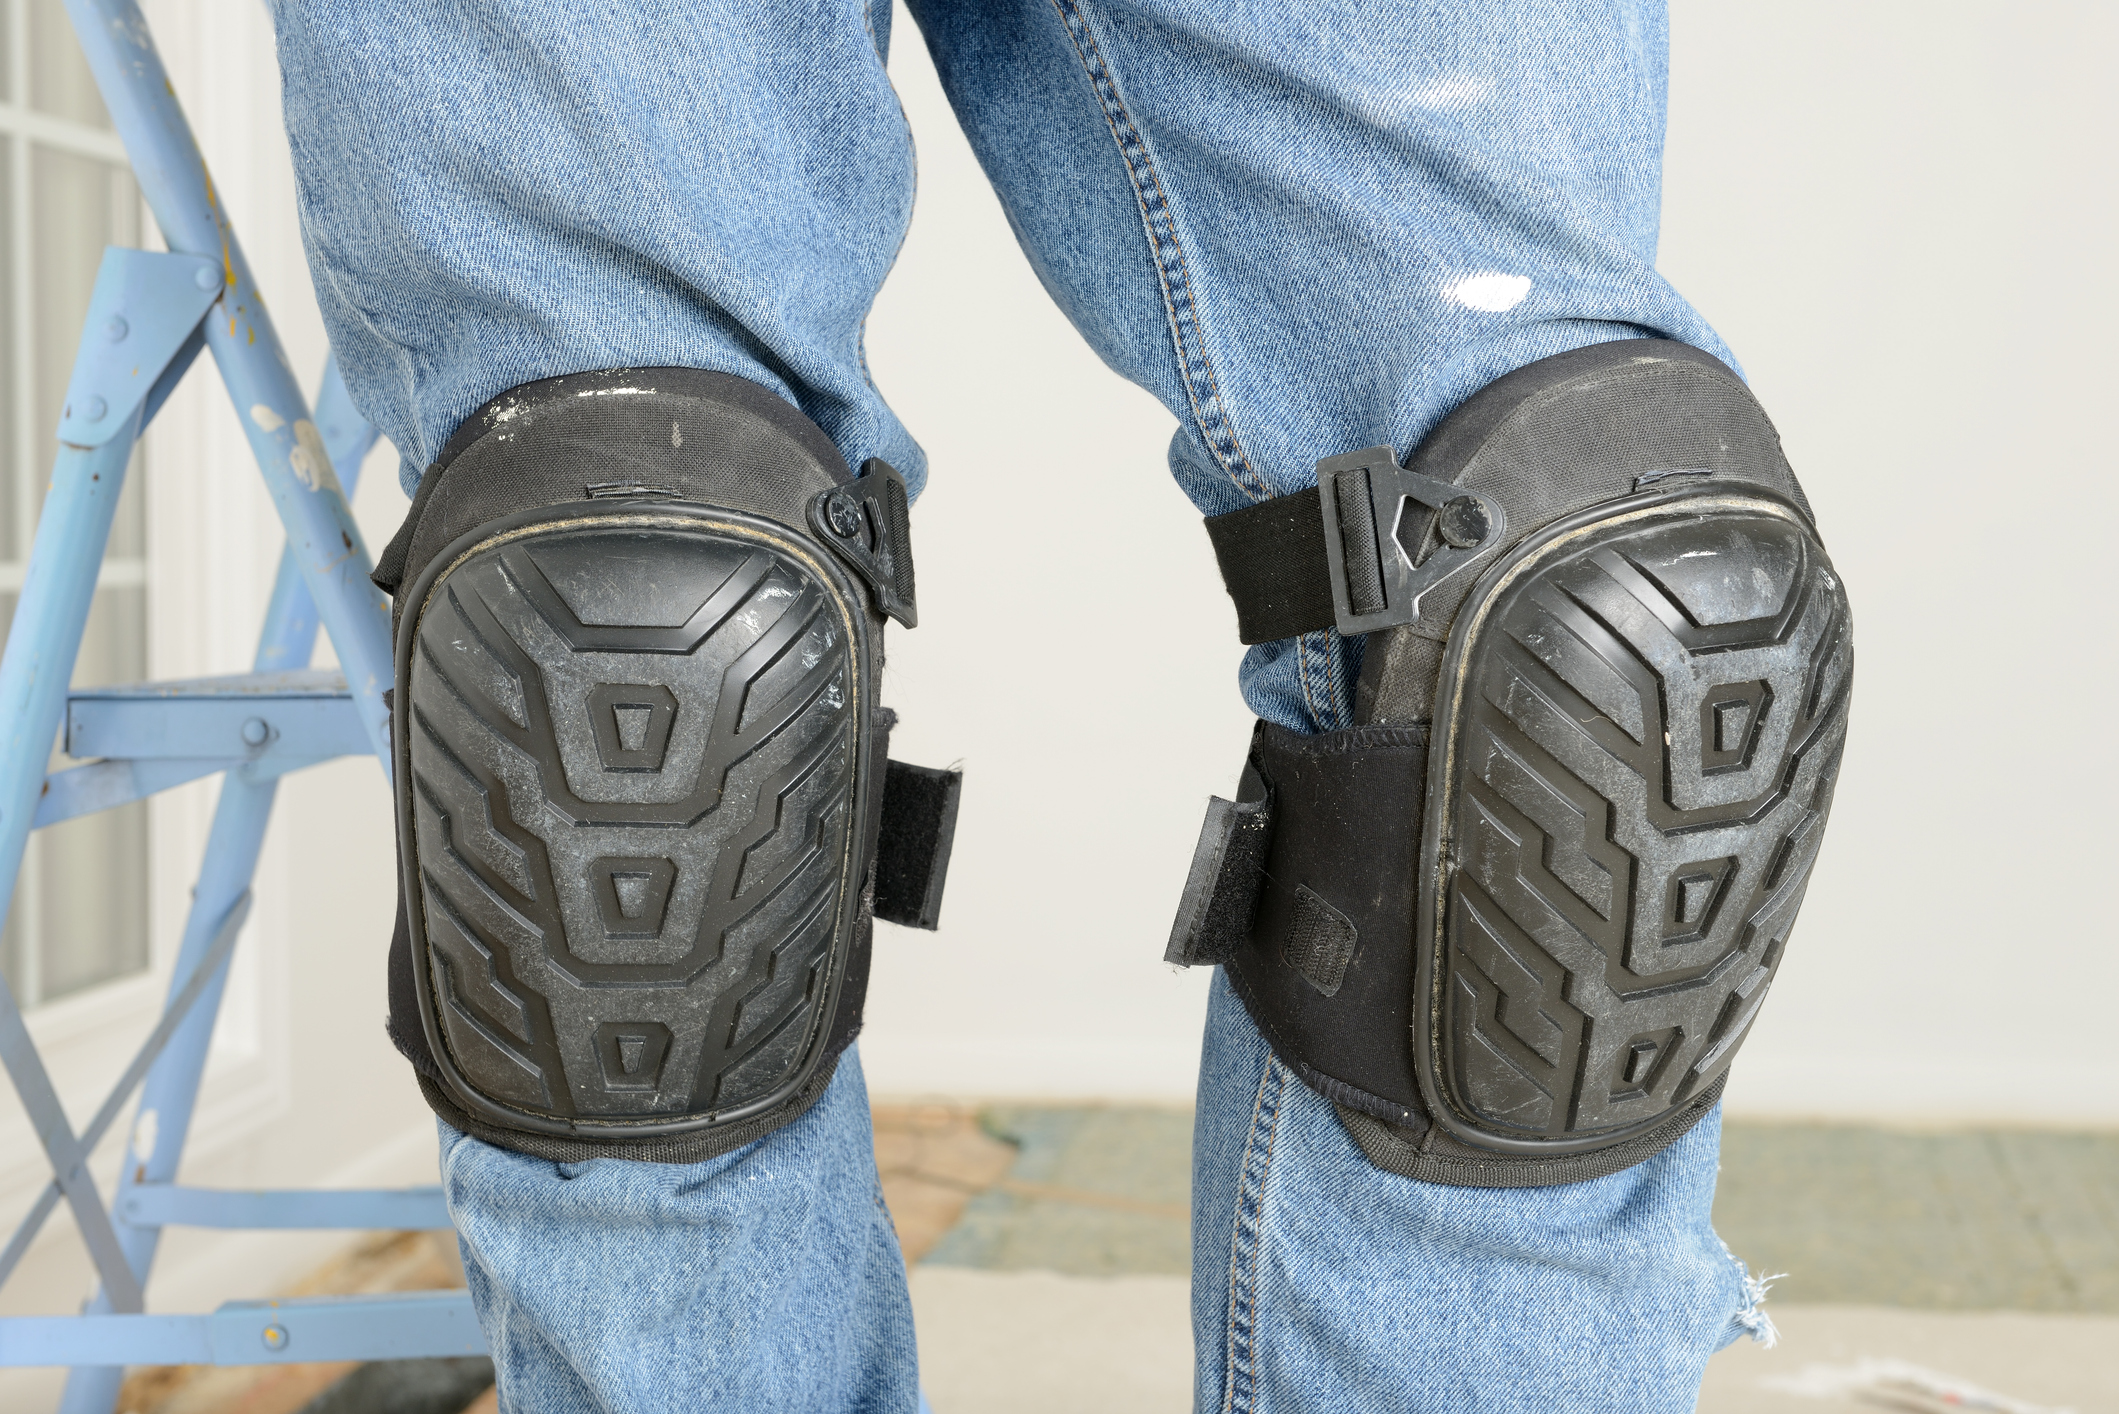 Heavy Duty Knee Pads Pro Gel Kneepads Protectors Safety Work Wear Guard 2021 vga 